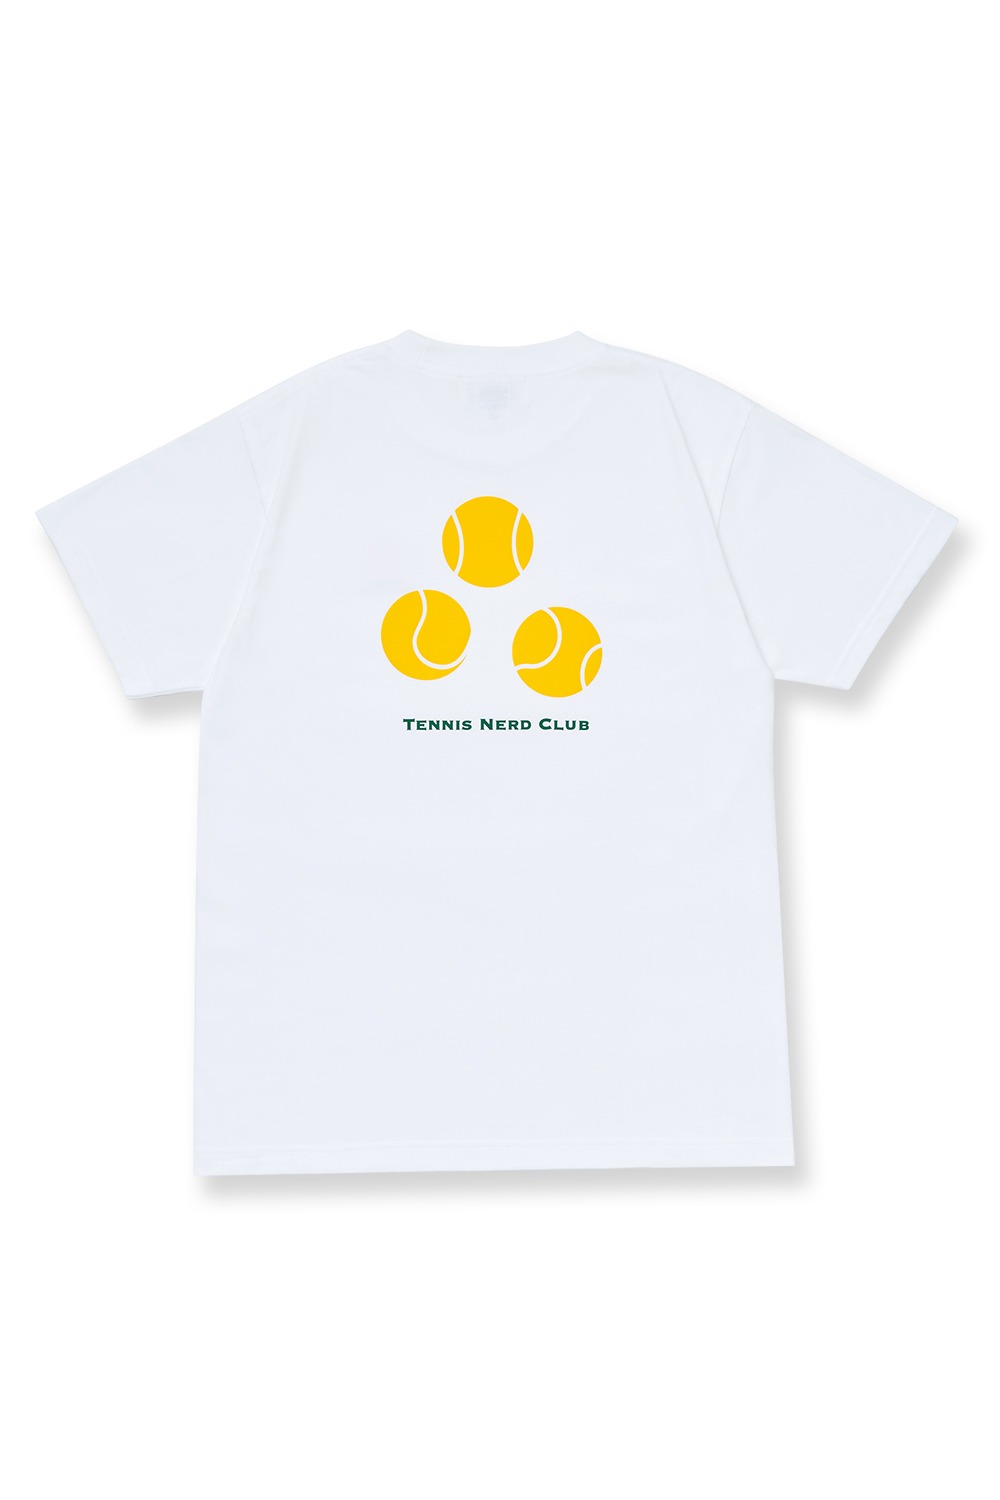 Tennis Nerd Club T-shirts (WHITE) RICHEZ